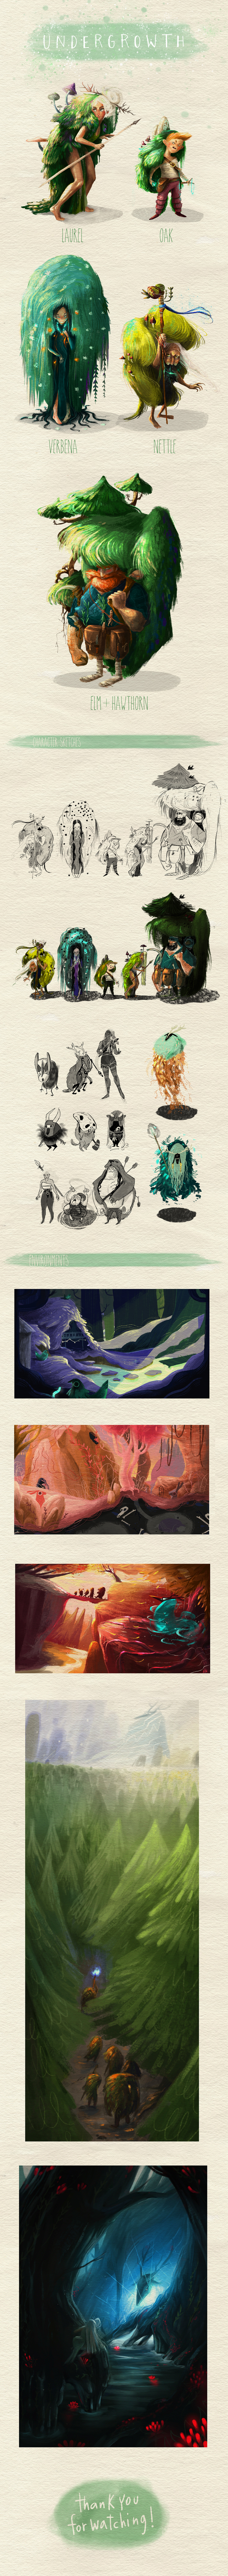 ILLUSTRATION  digital illustration videogame concept art painterly Character design  Nature forest environment Creature Design